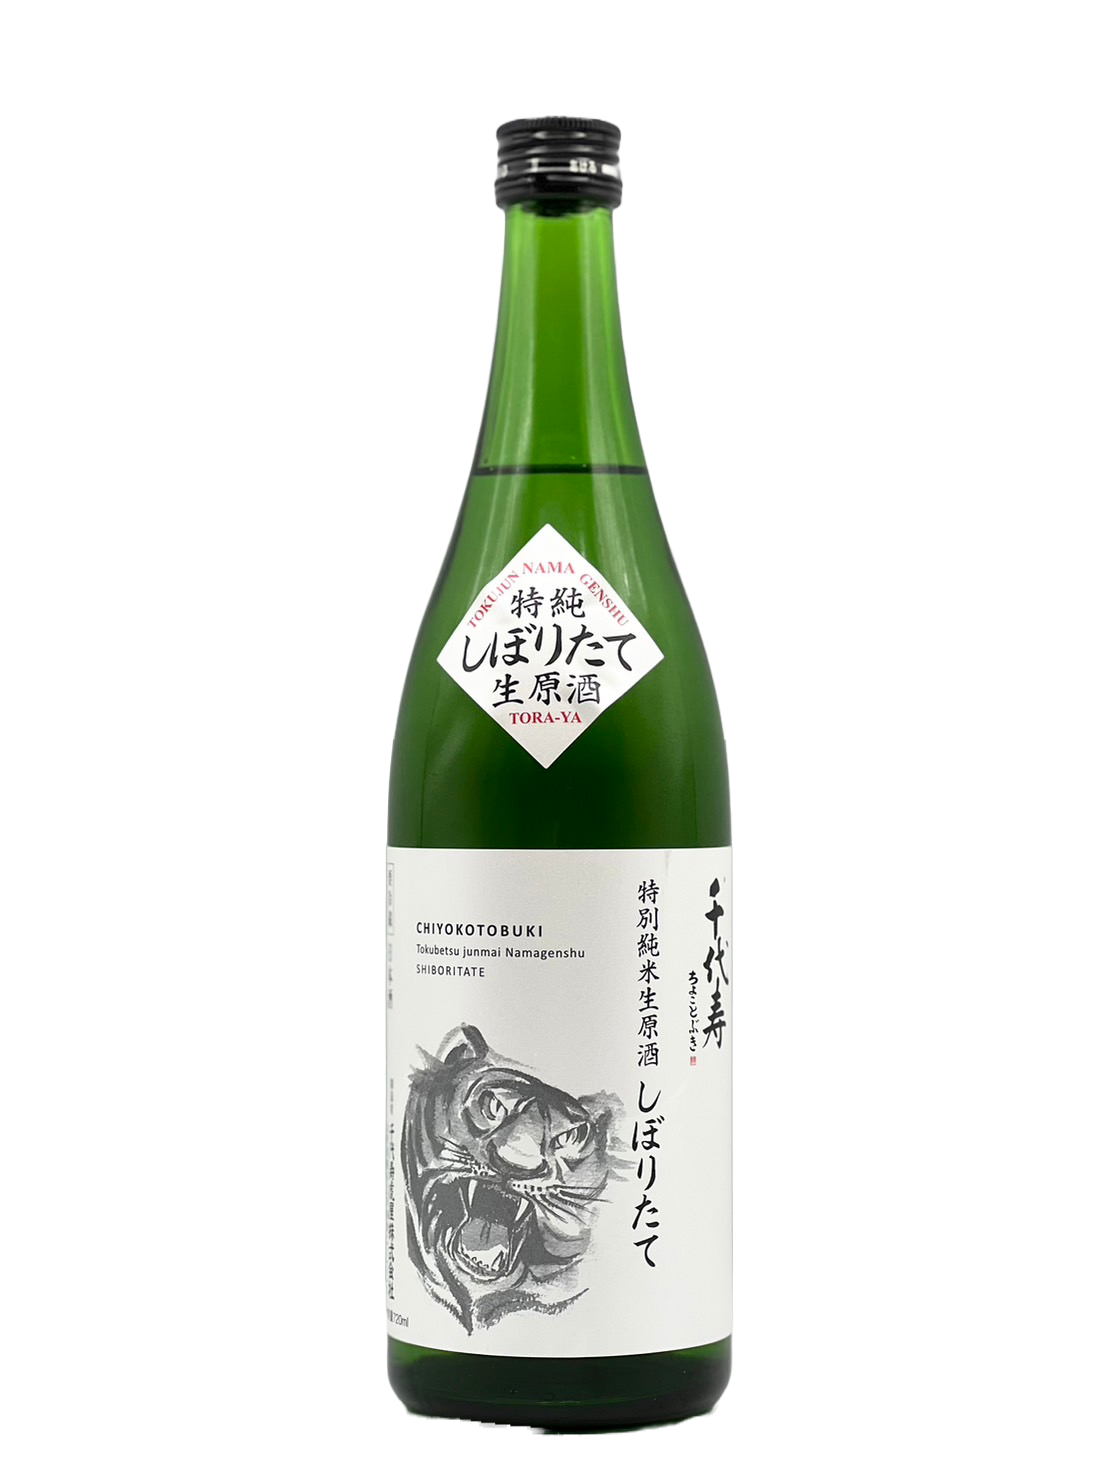 Special pure rice raw sake freshly squeezed tiger label Chiyo Kotobuki